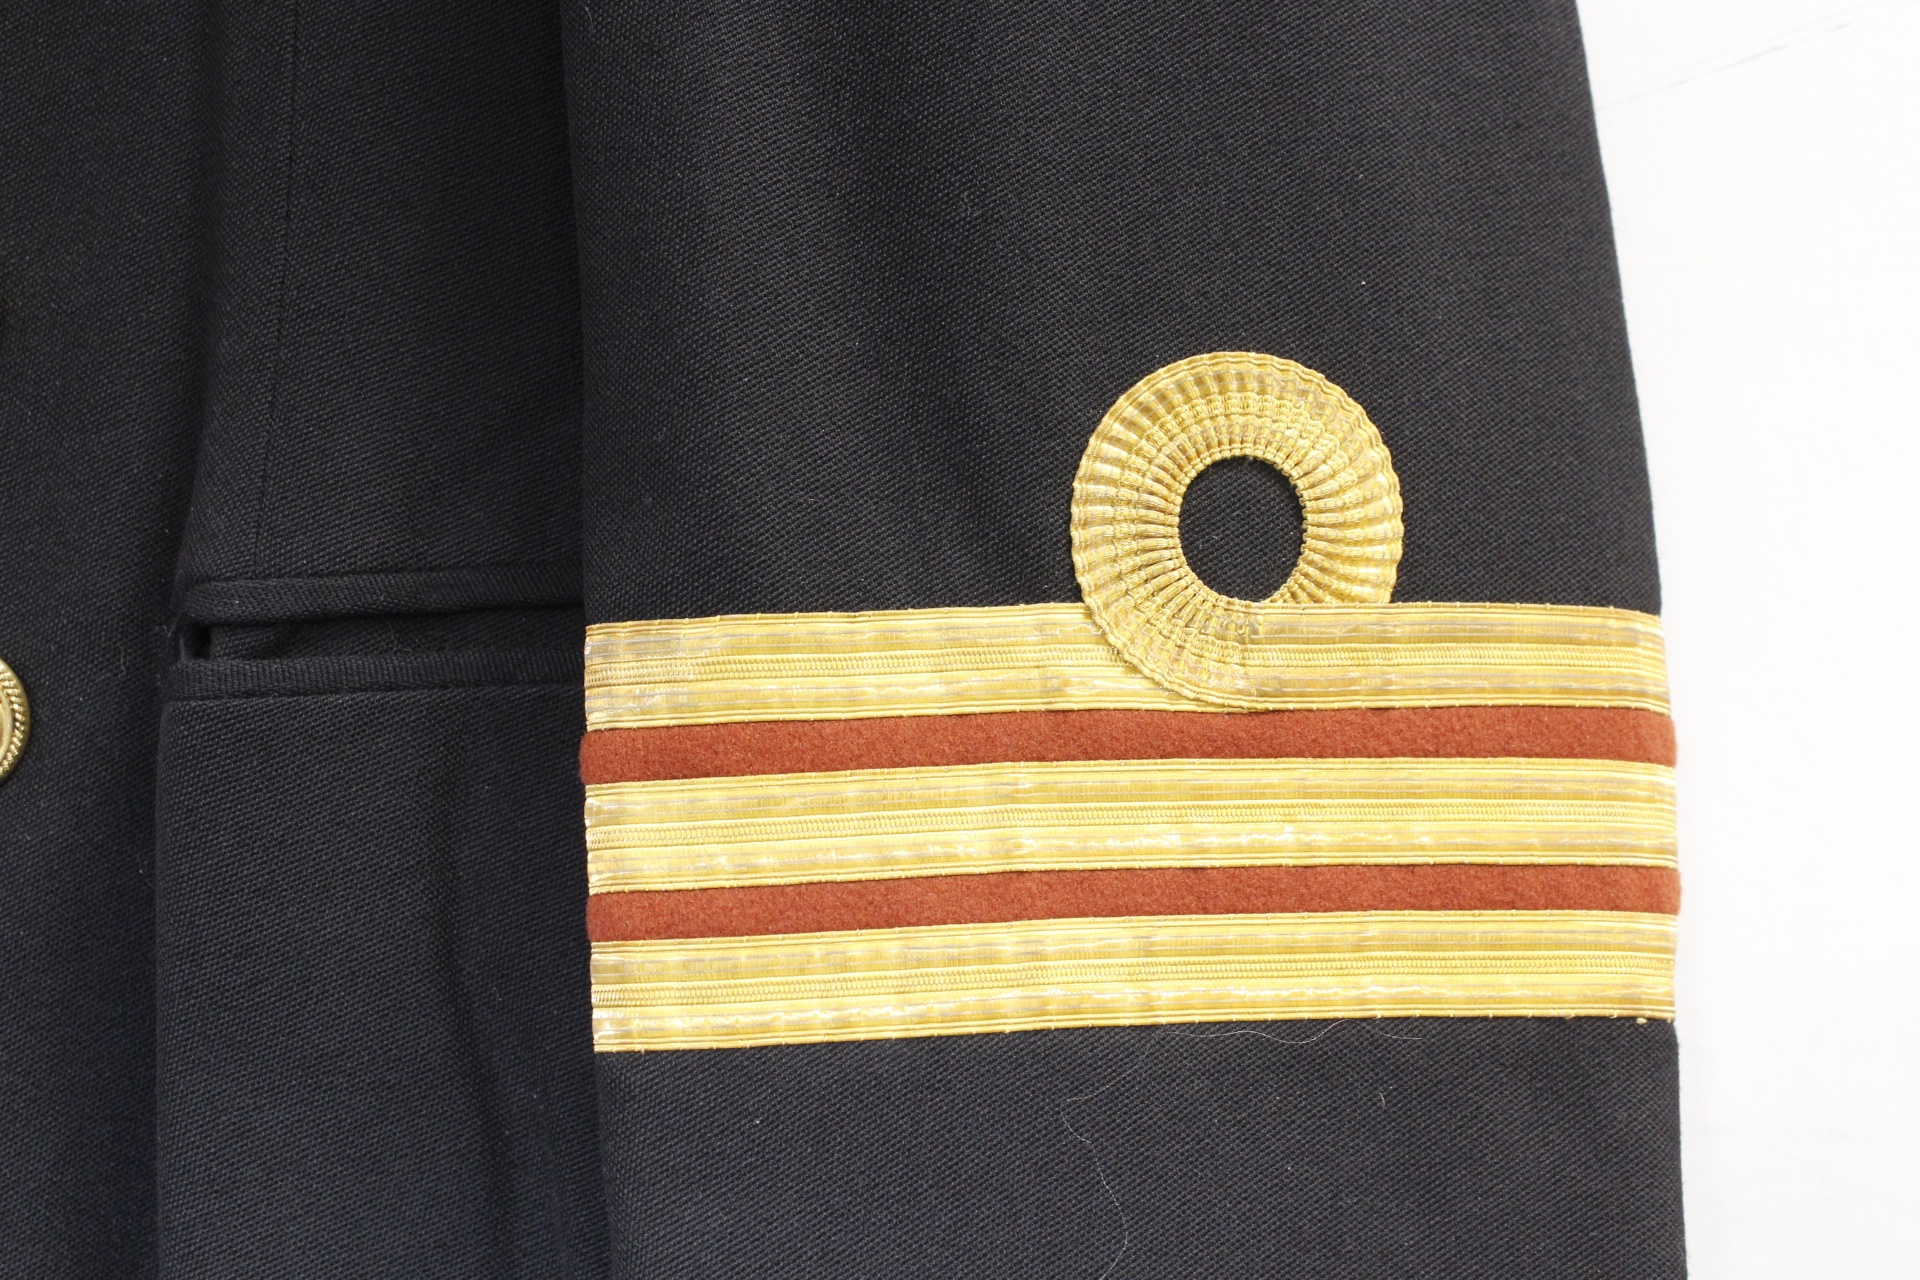 British Royal Navy dress uniform jacket having brass naval buttons by Gieves Ltd, bullion wire - Image 2 of 4